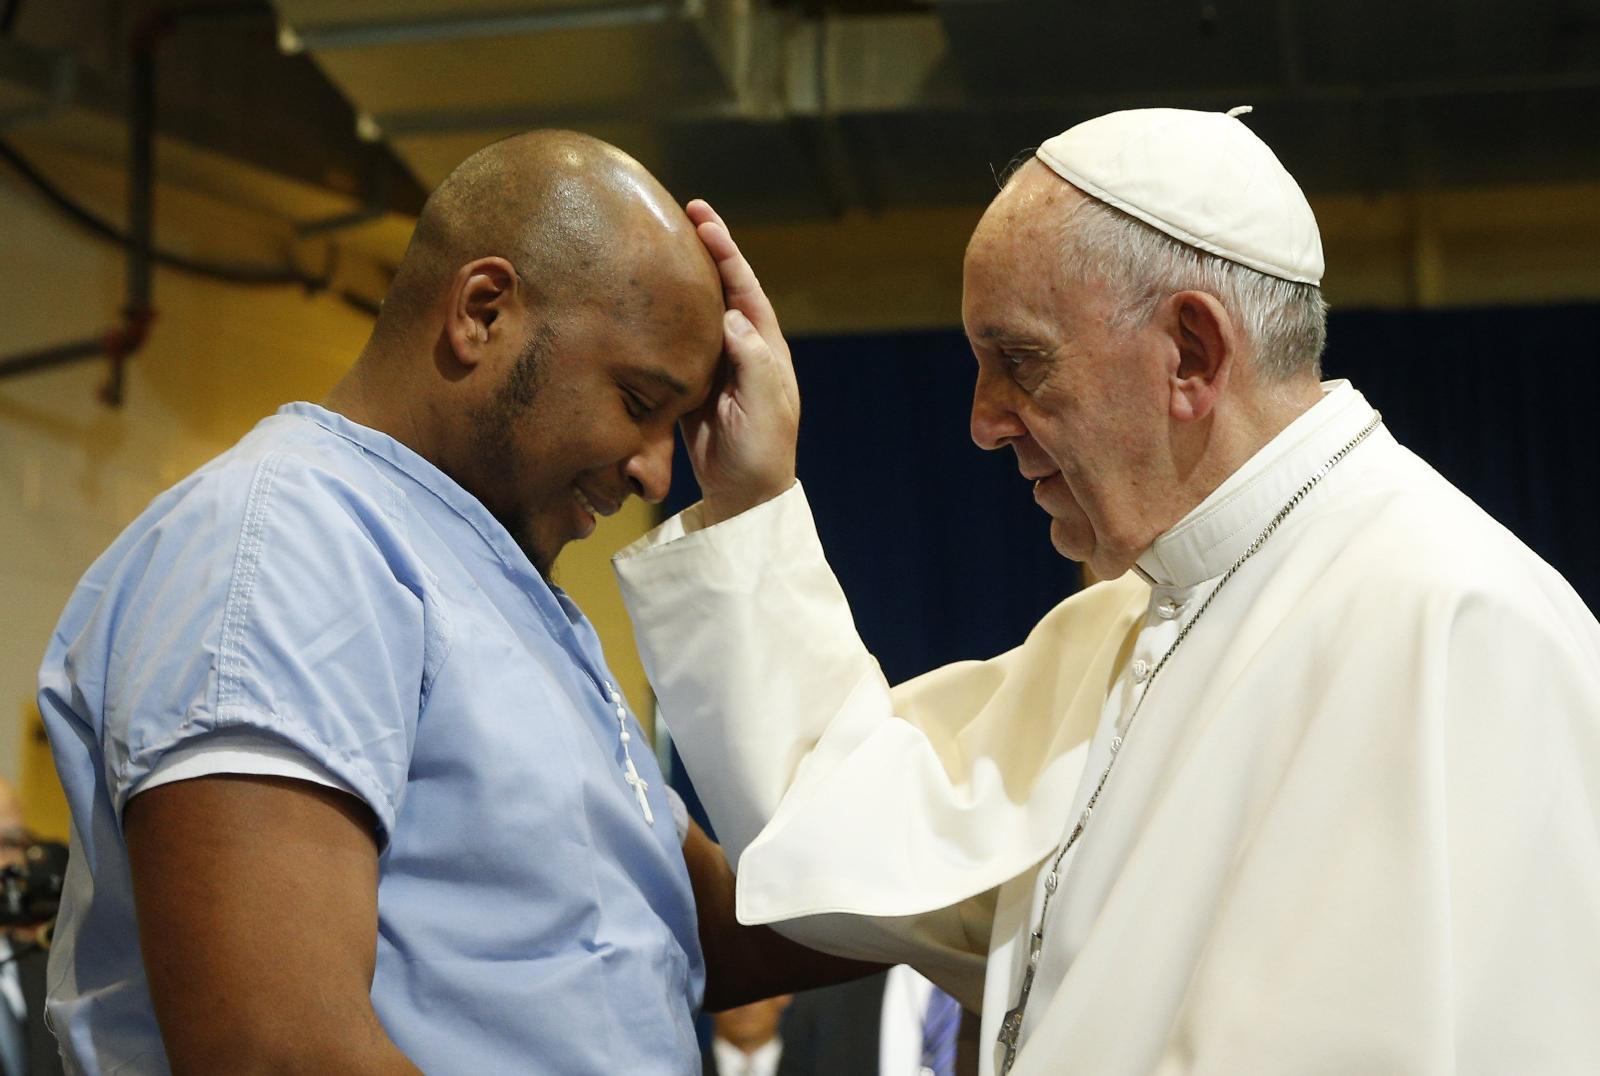 Pope Francis blesses a prisoner